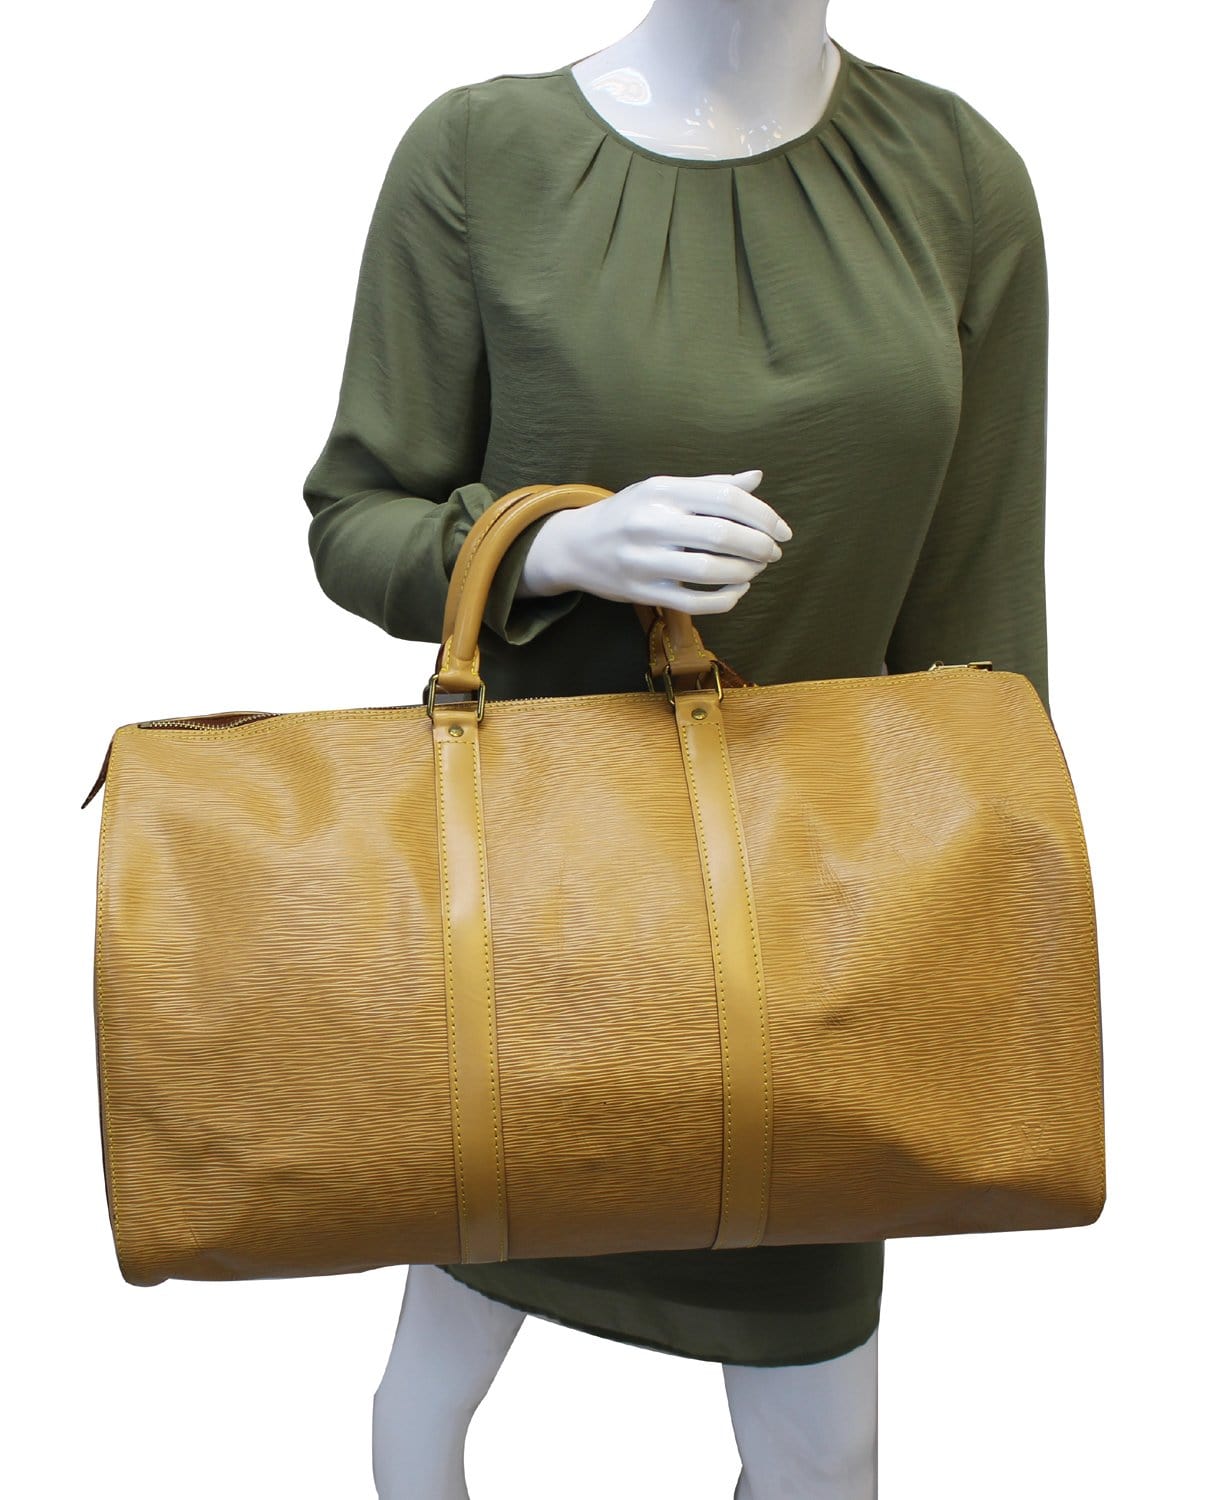 Louis Vuitton Tan Epi Leather Keepall 55 Travel Weekend Bag Beige